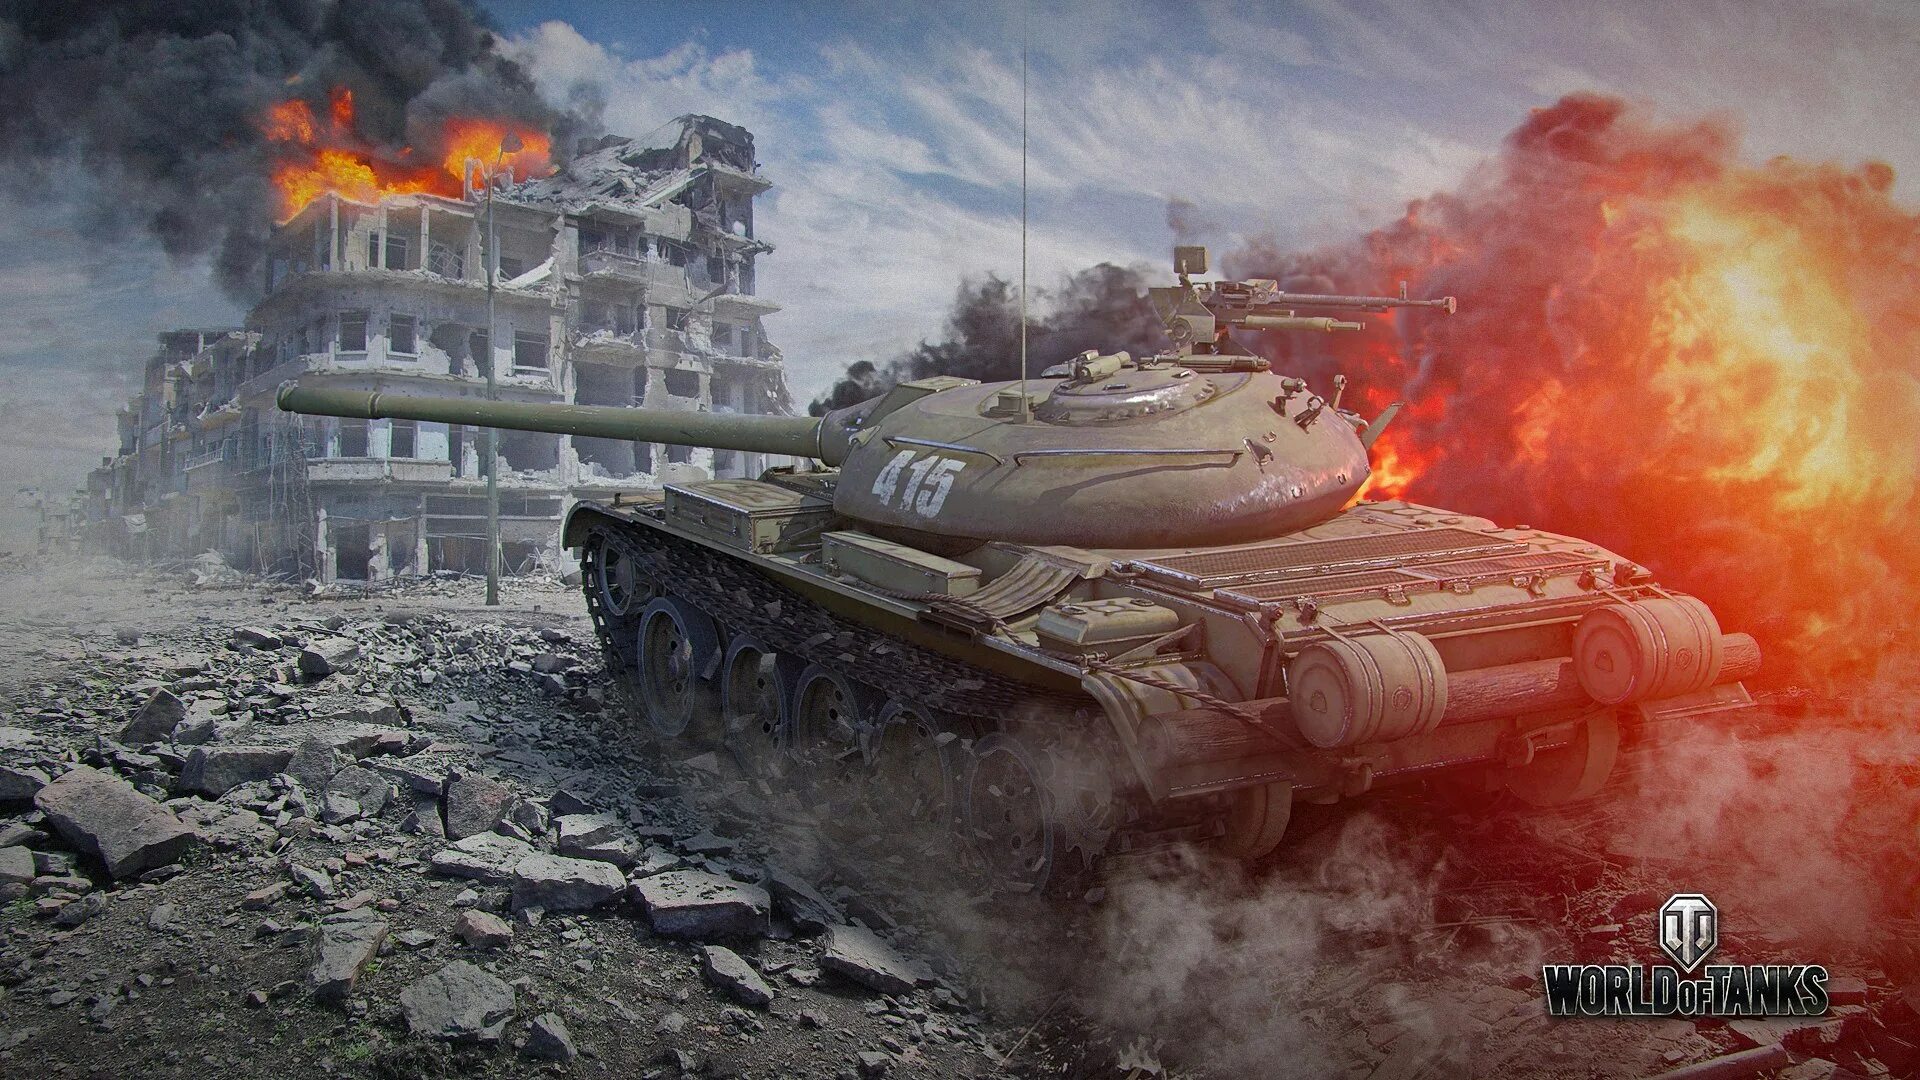 Wot 54. Т-54 World of Tanks. Т54 танк World of Tanks. Т 55 ворлд оф танк. Т54 танк World of Tanks Blitz.